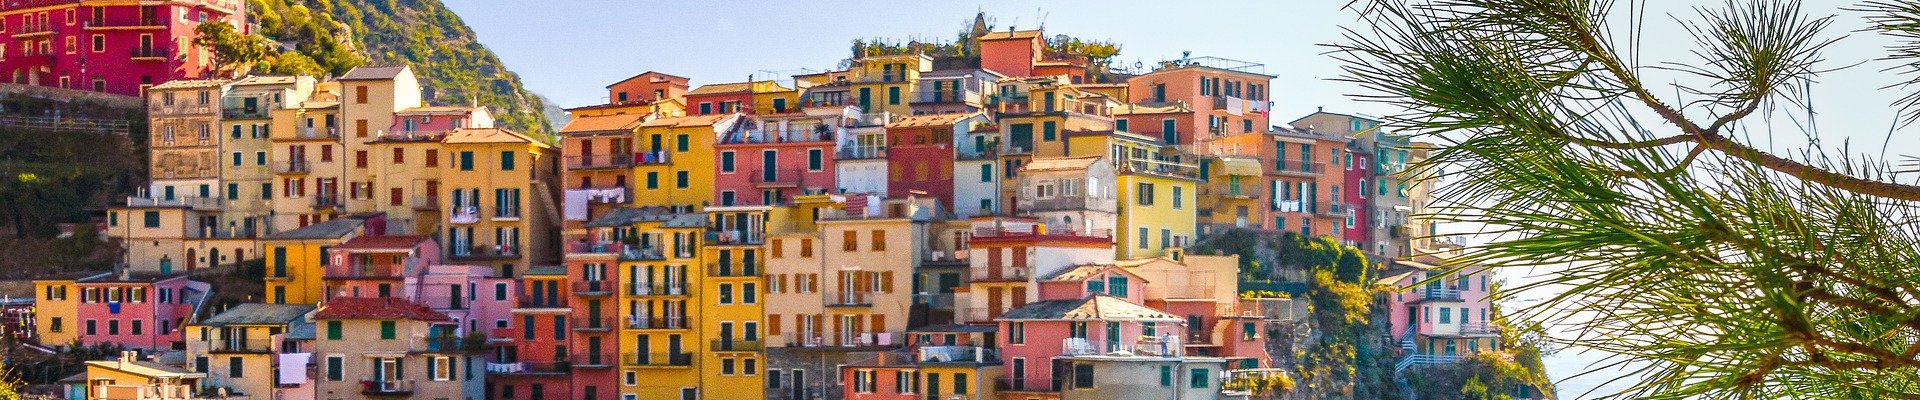 Cinque Terre, putovanja u Italiju